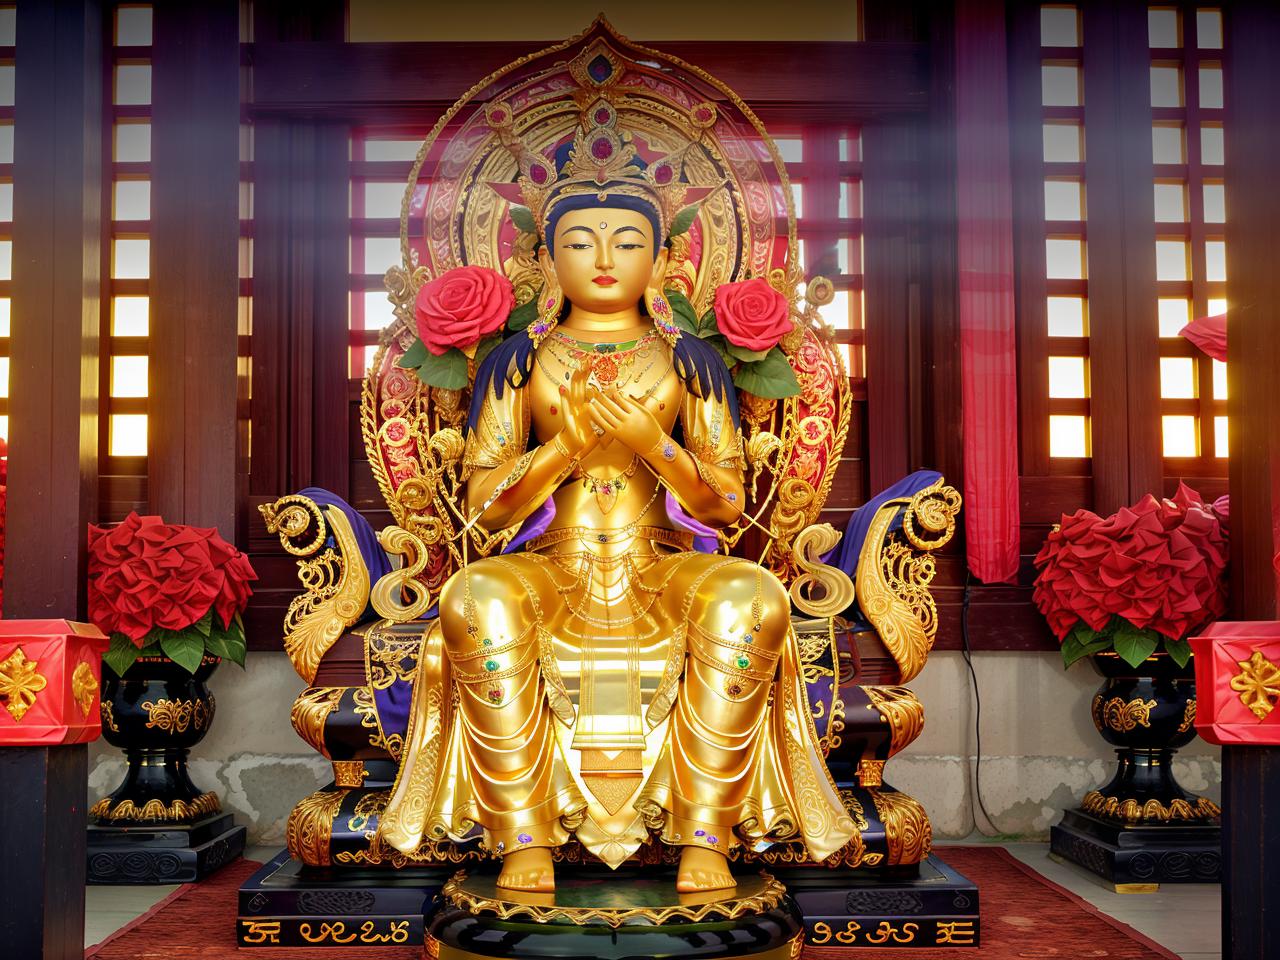 Heavenly Crown Maitreya Bodhisattva image by tasibigshot529